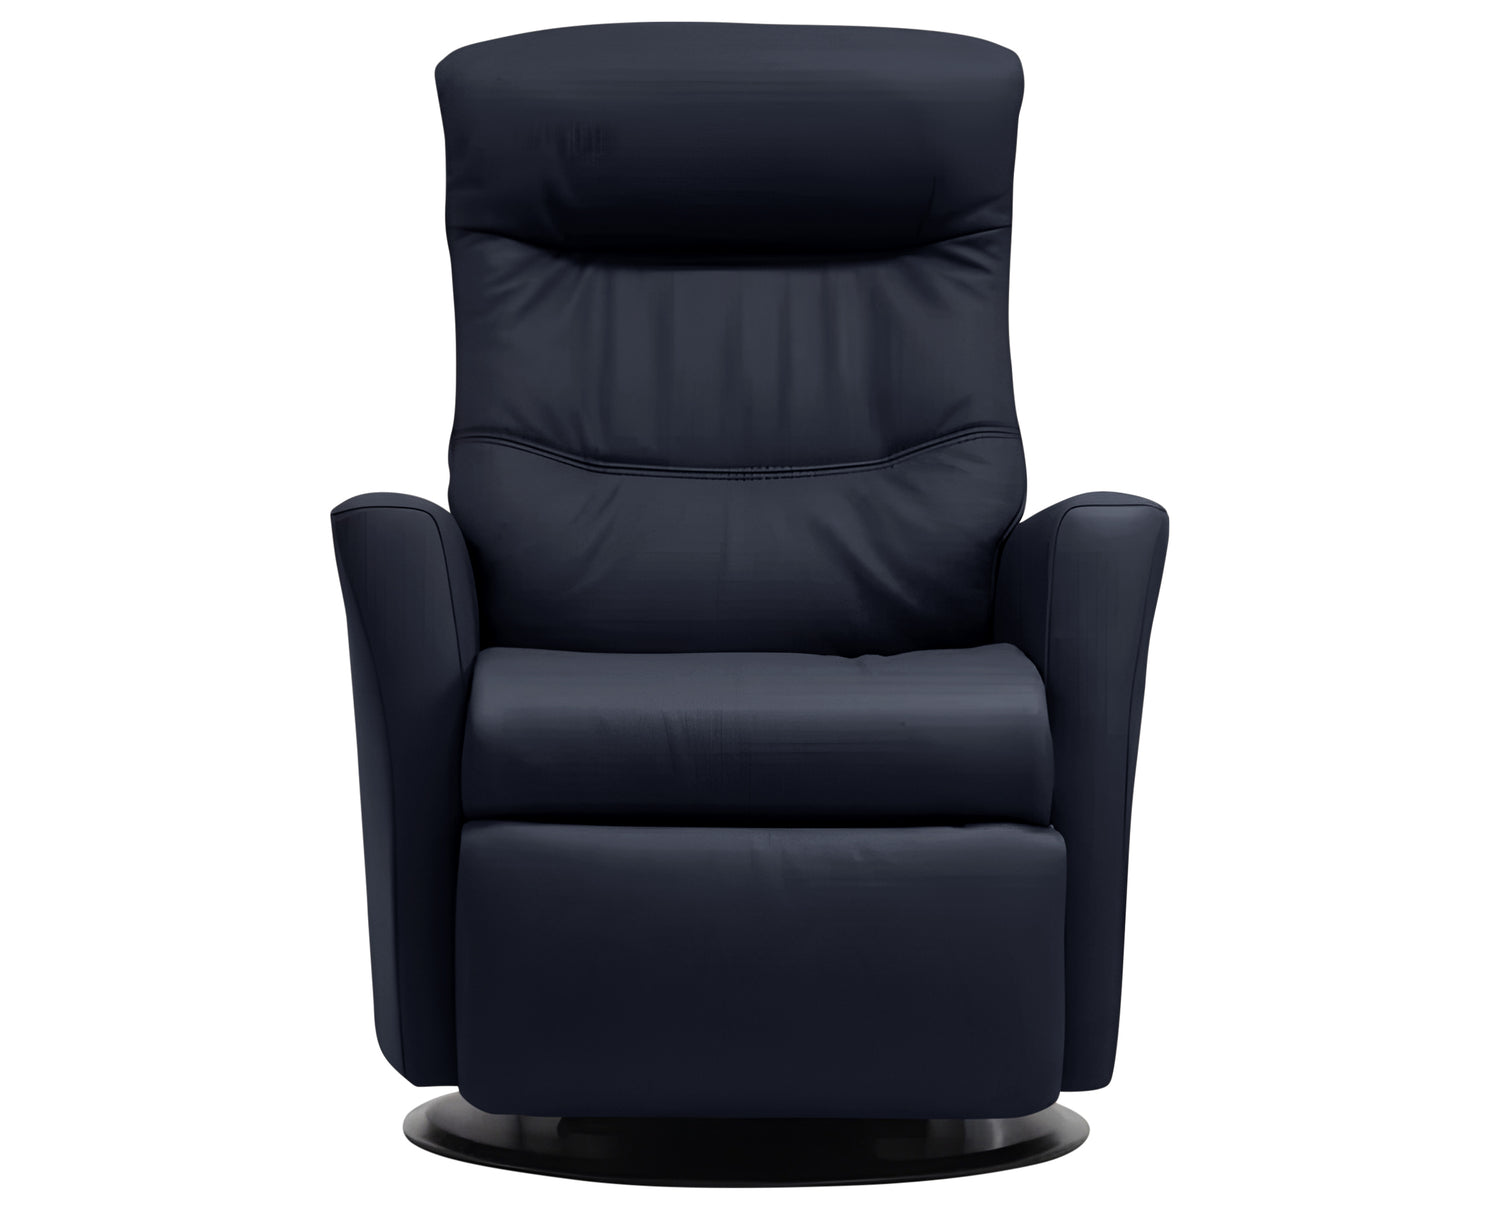 Trend Leather Tuxedo M | Norwegian Comfort Lord Recliner - Promo | Valley Ridge Furniture